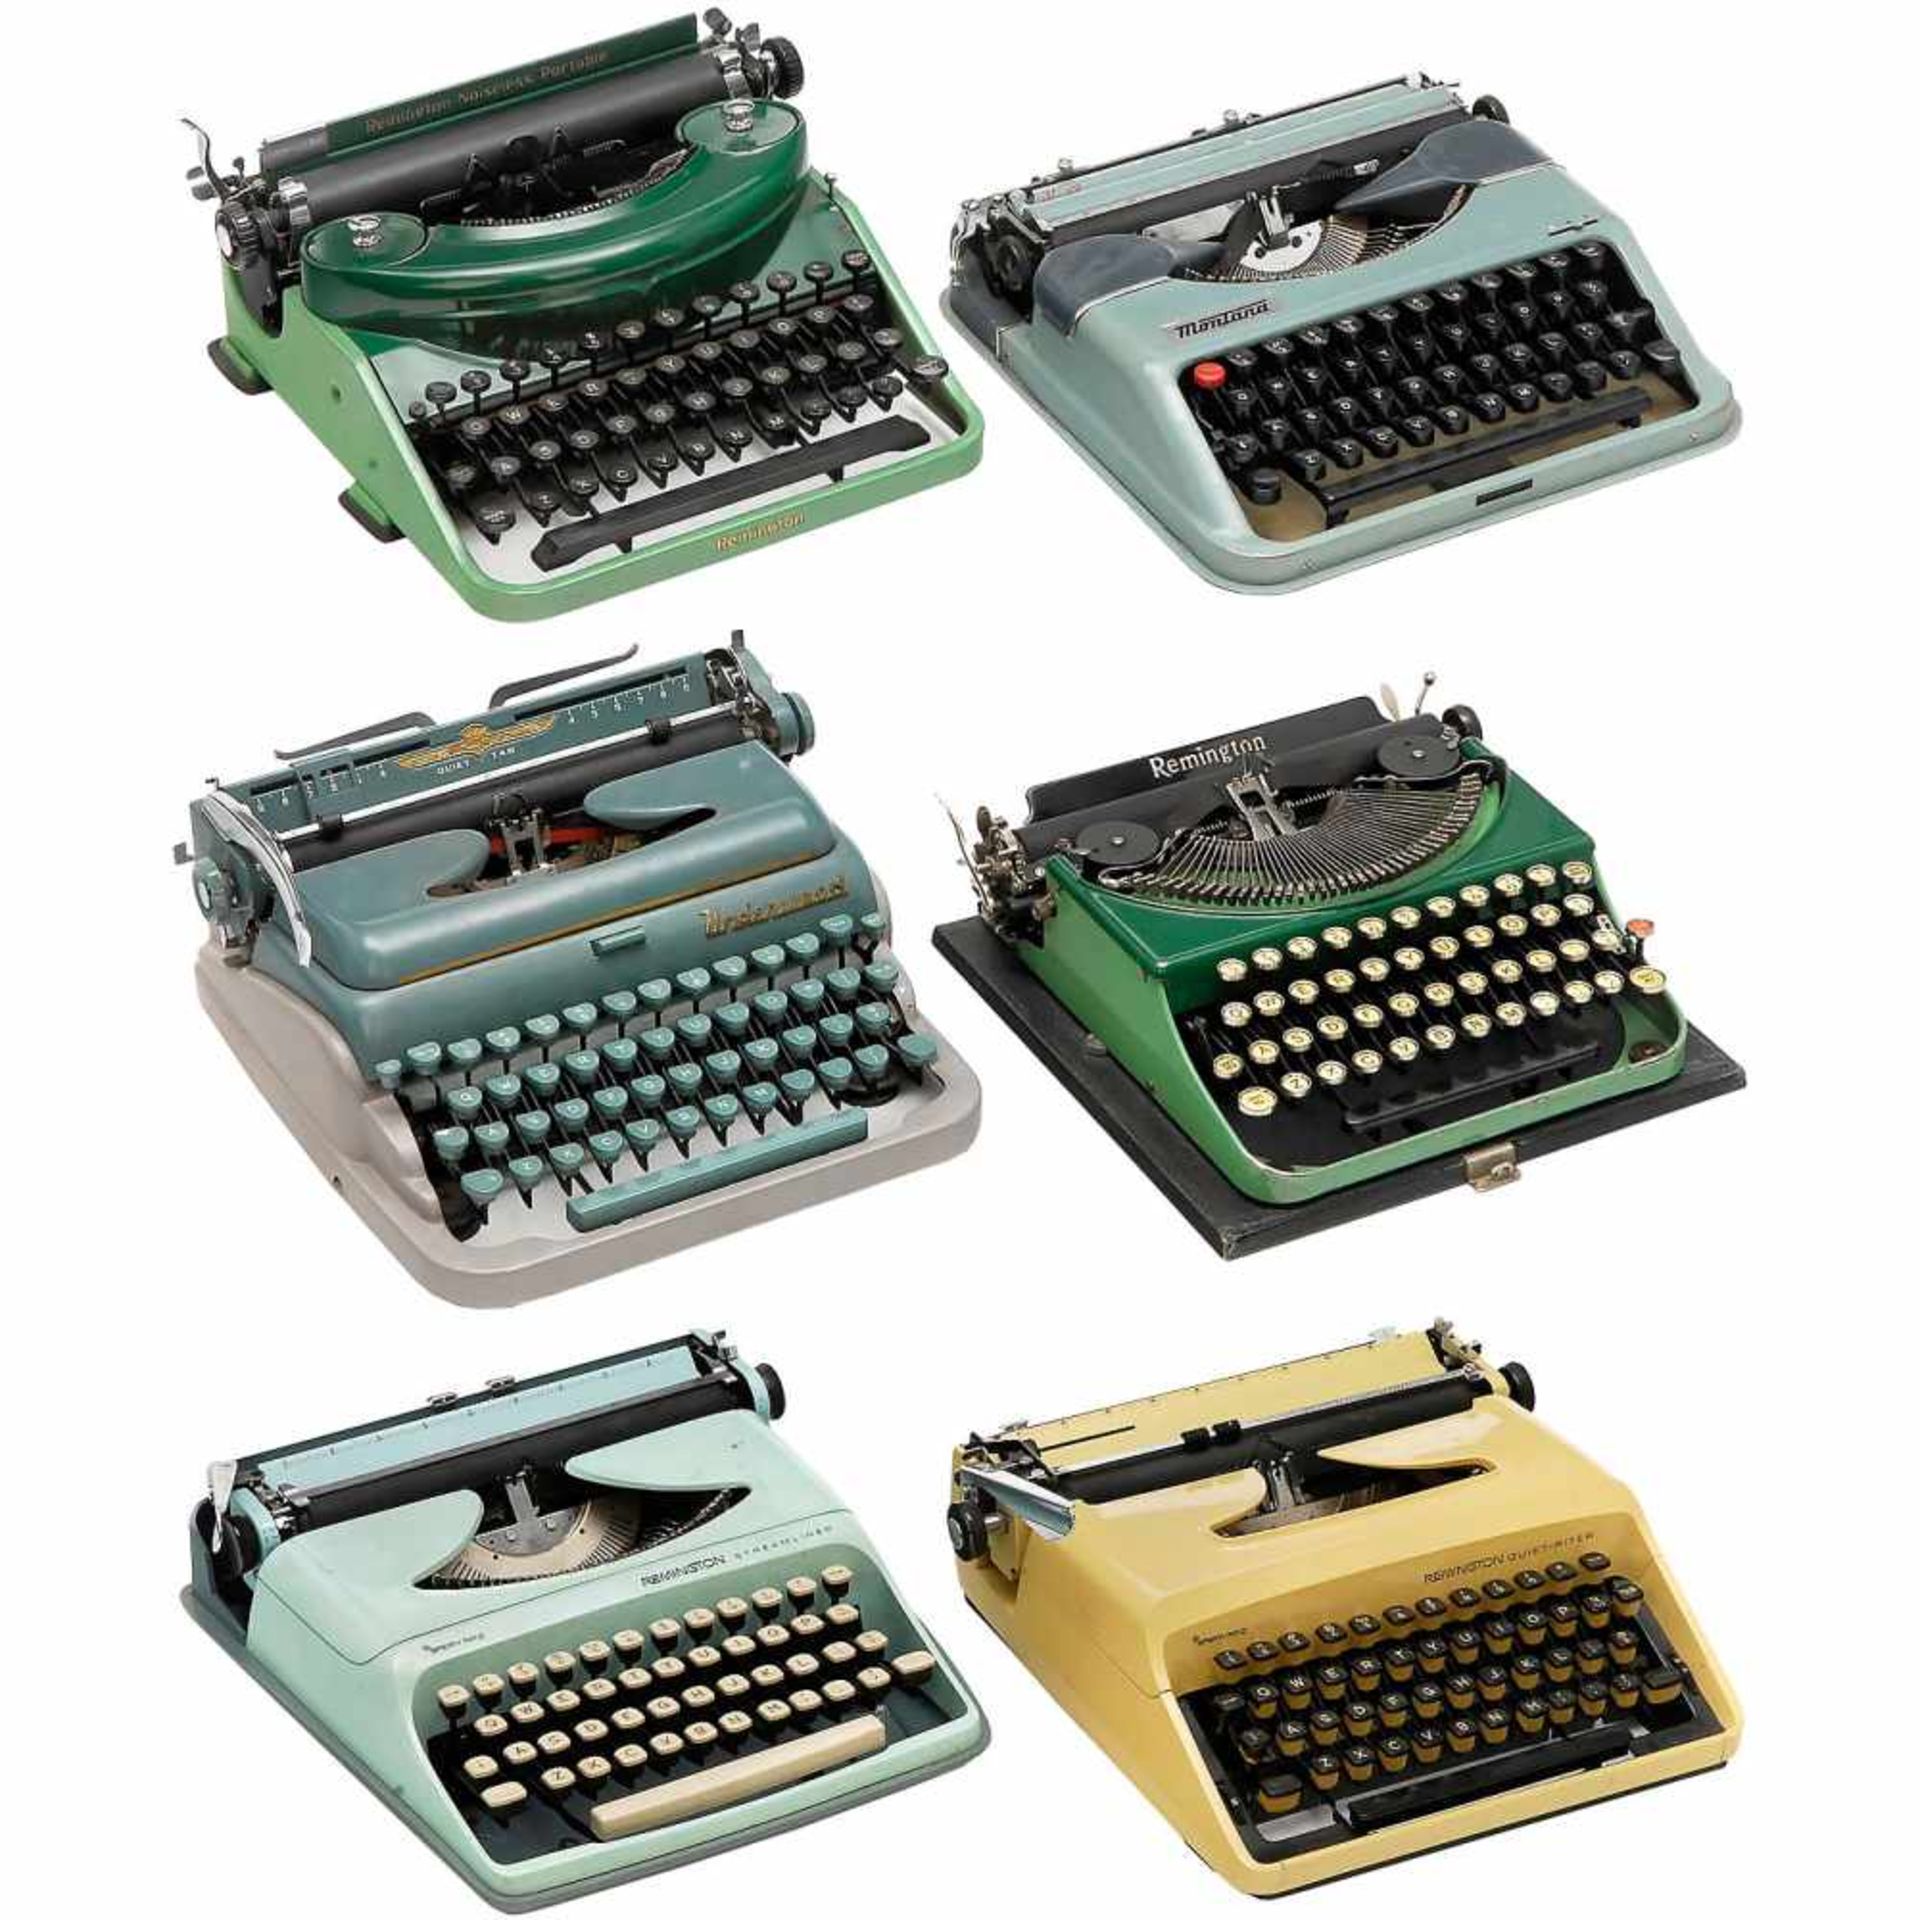 6 American Portable Typewriters1) Remington Noiseless, green. - 2) Montana, blue. - 3) Underwood